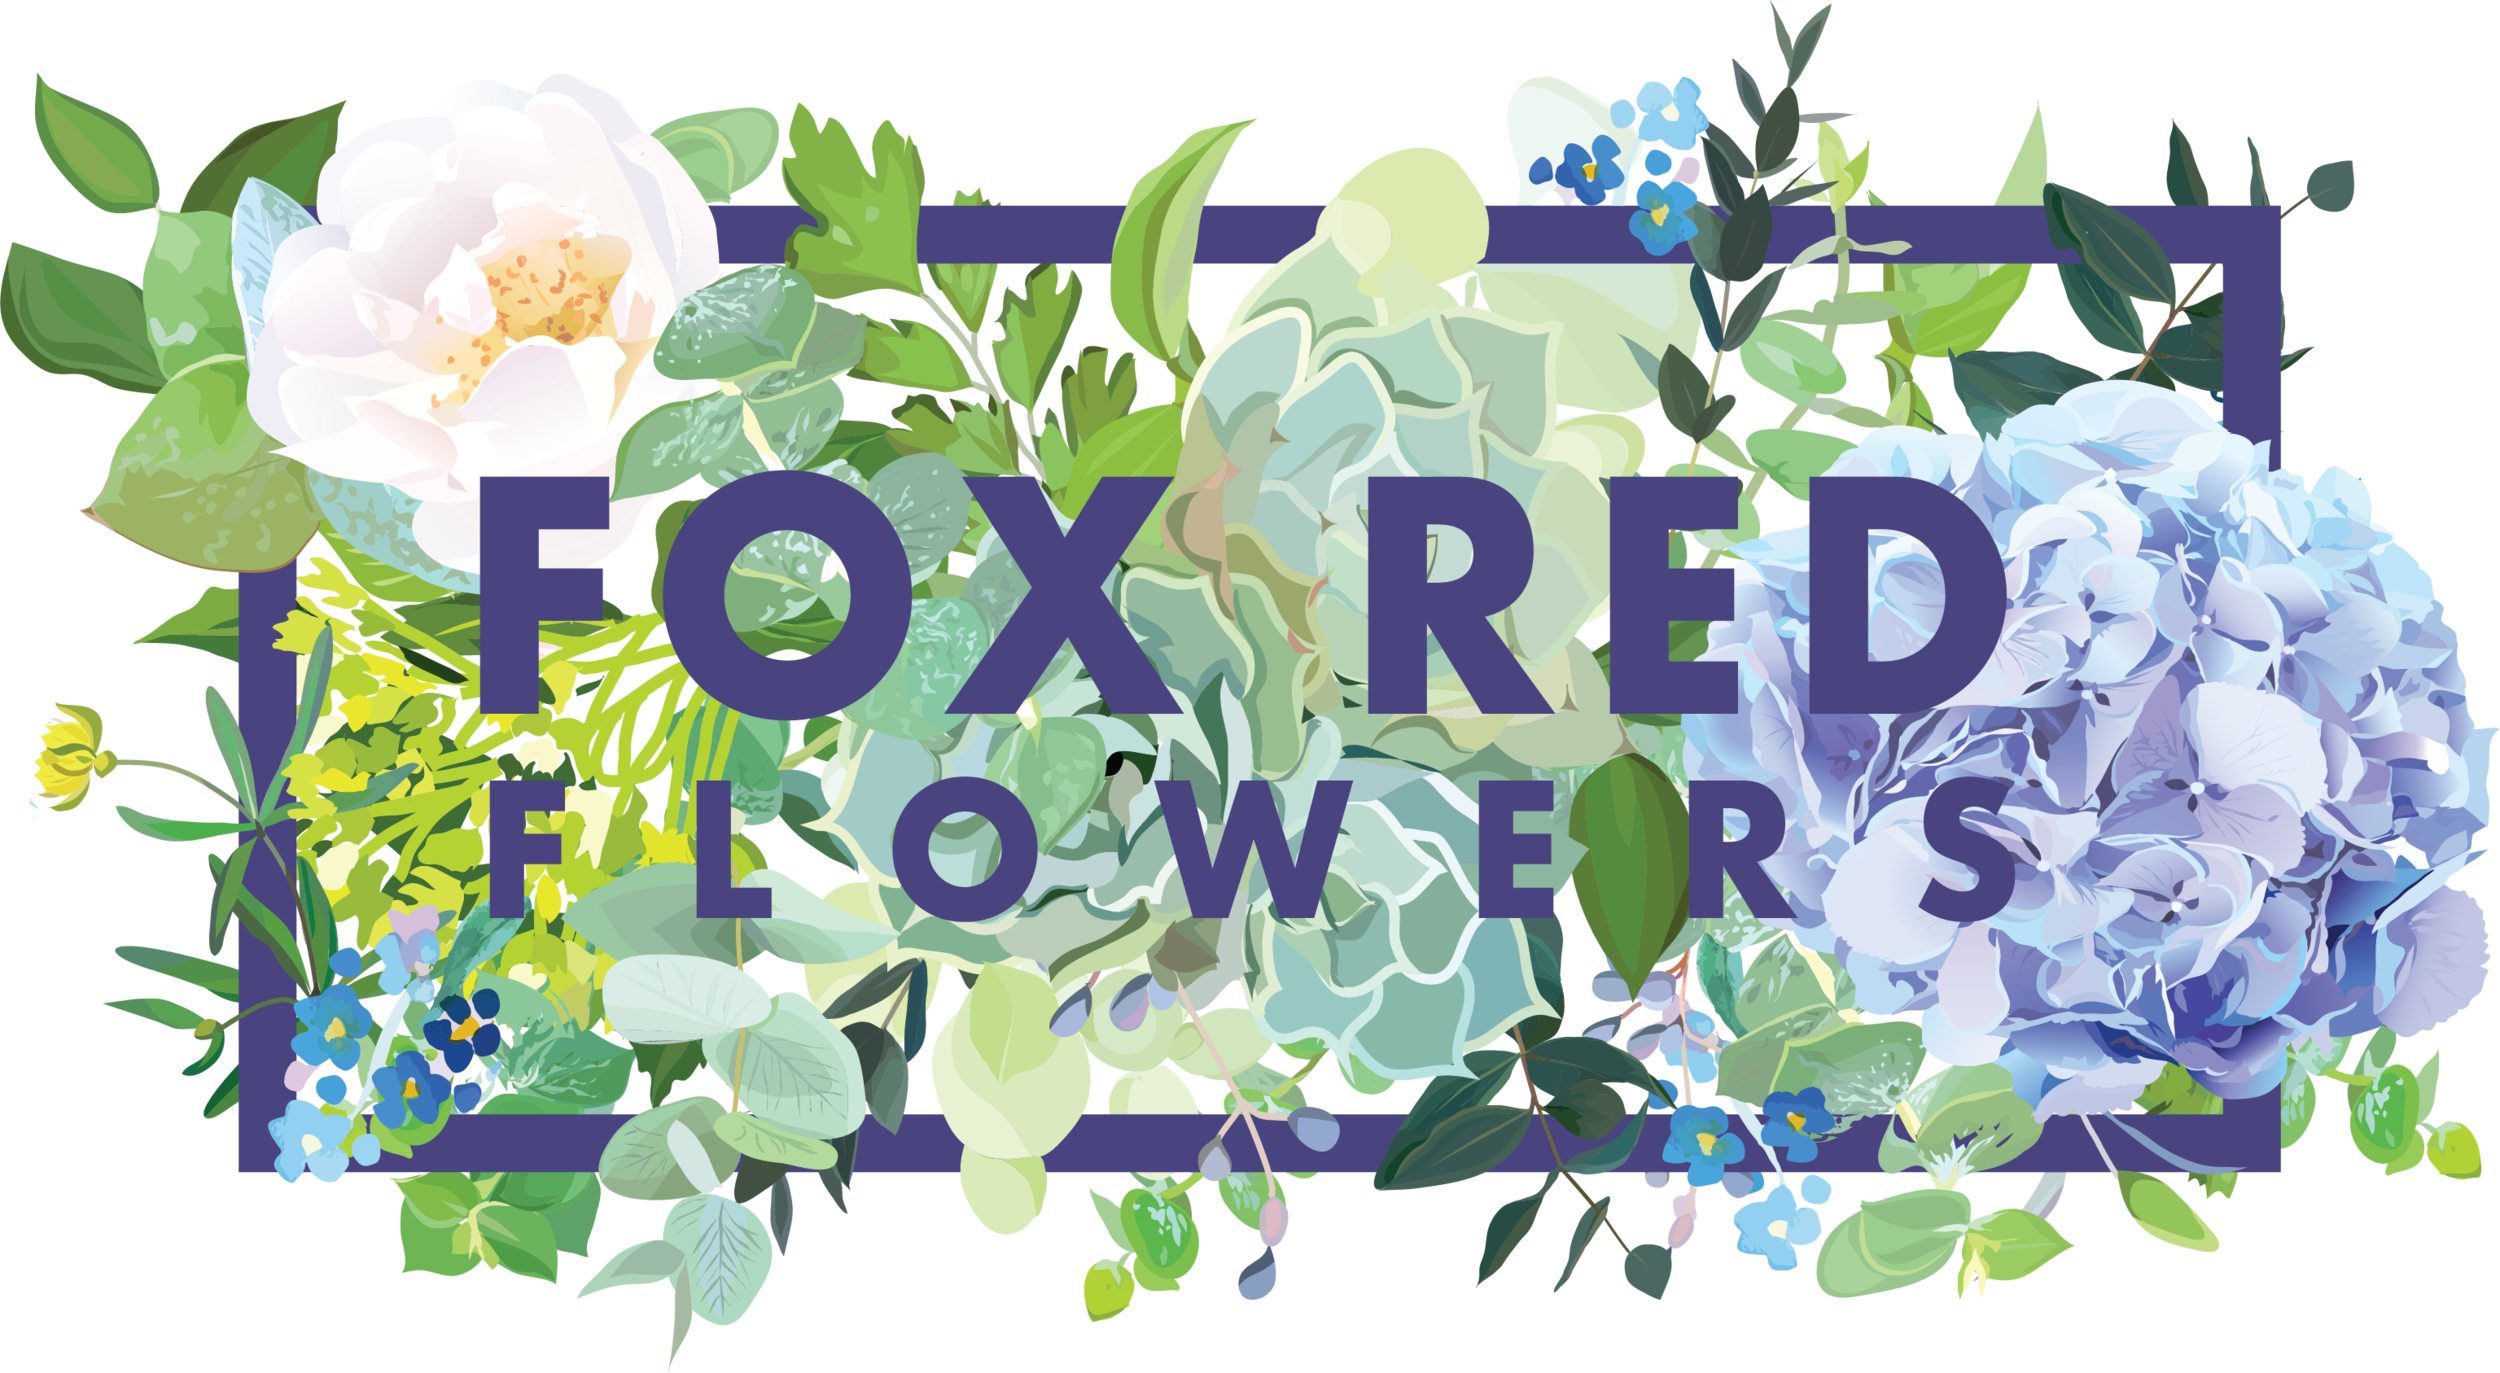 Fox red flowers